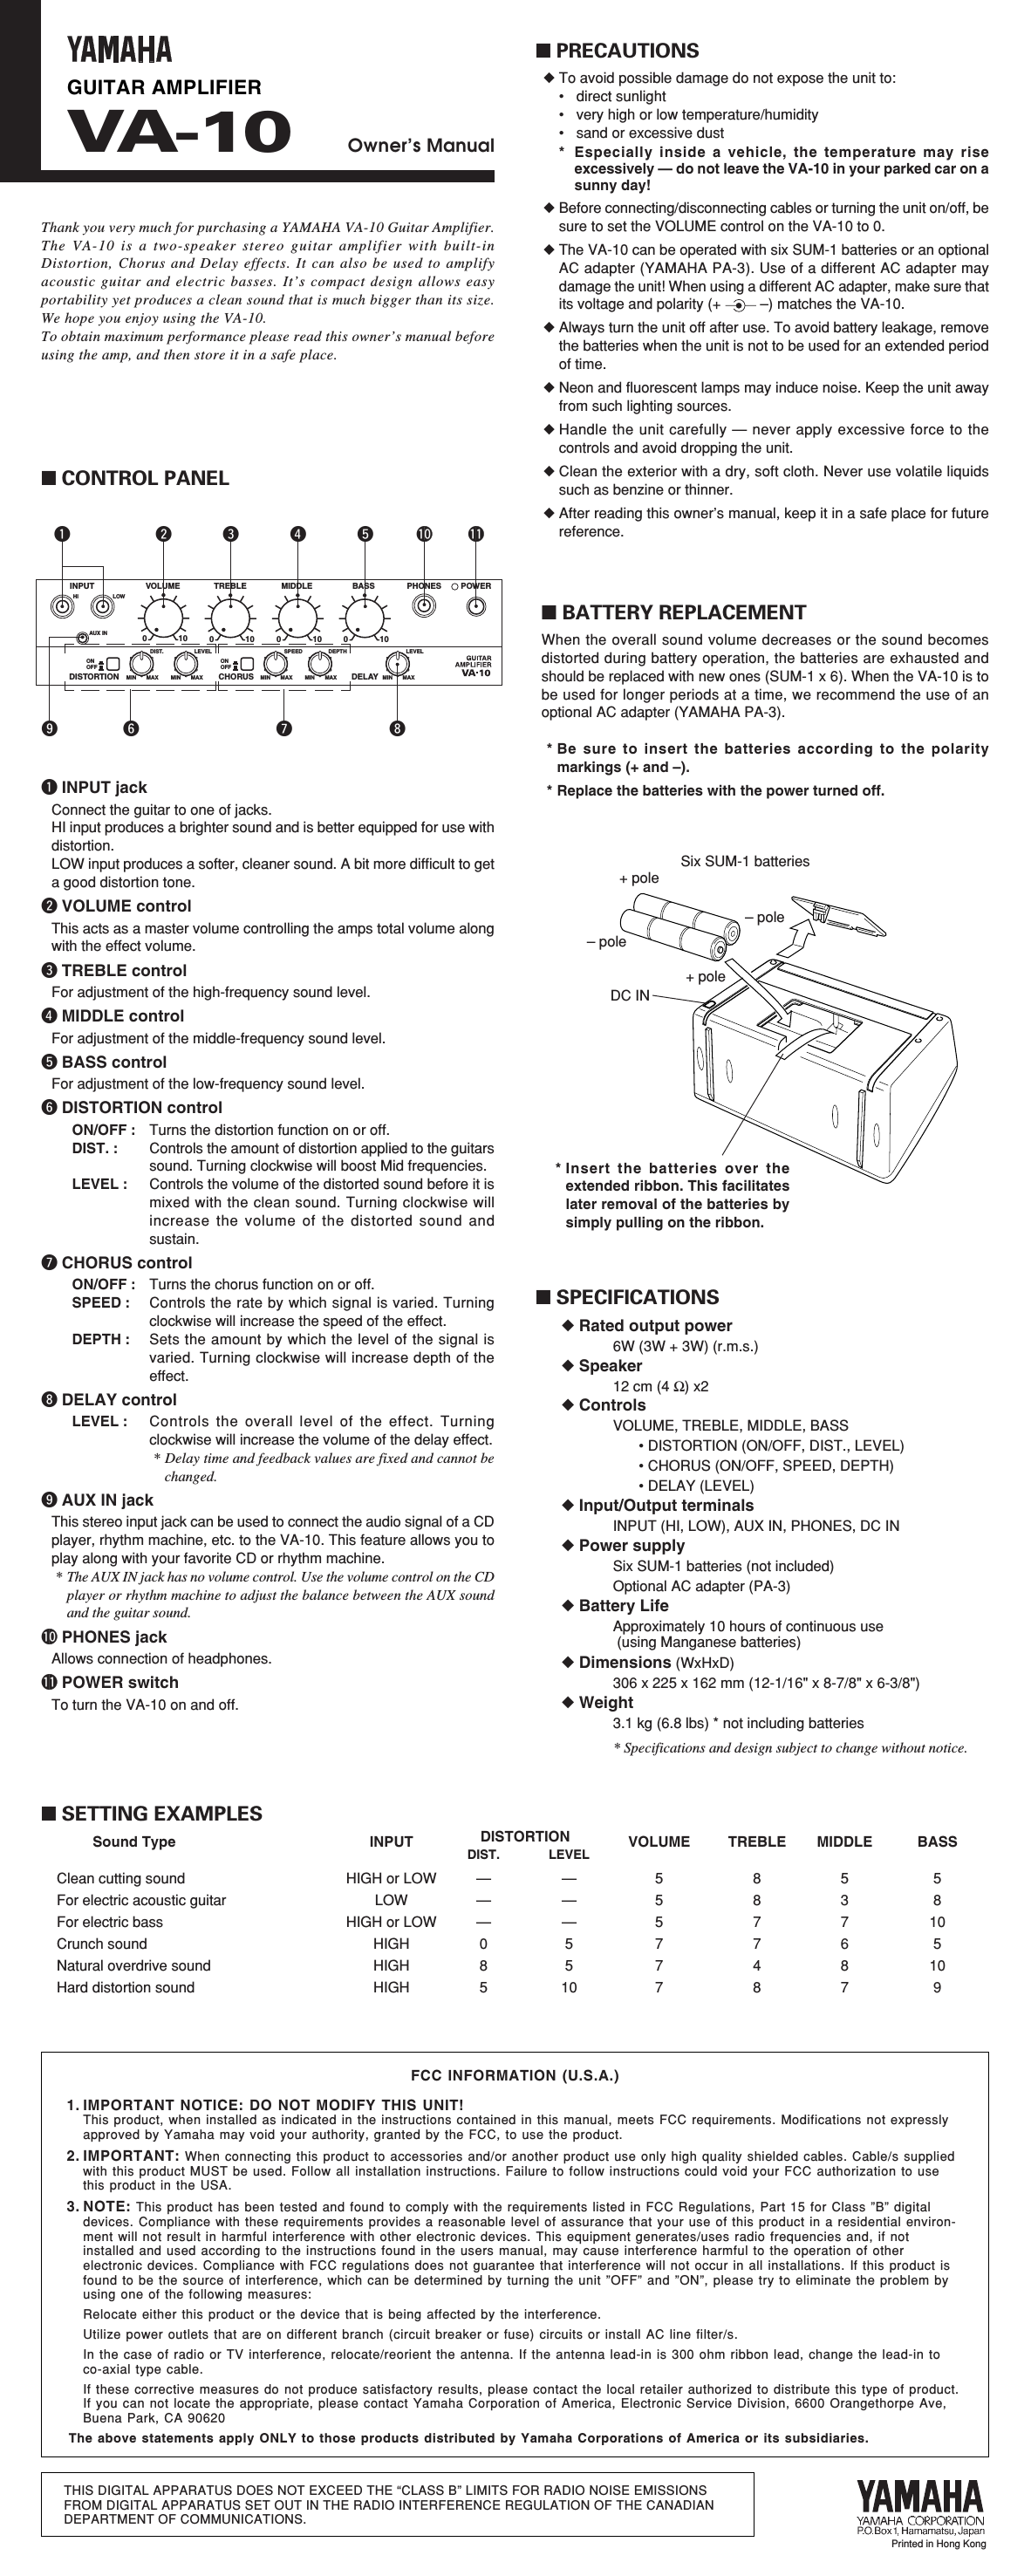 Page 2 of 4 - Yamaha  VA-10 Owner's Manual Va10 En